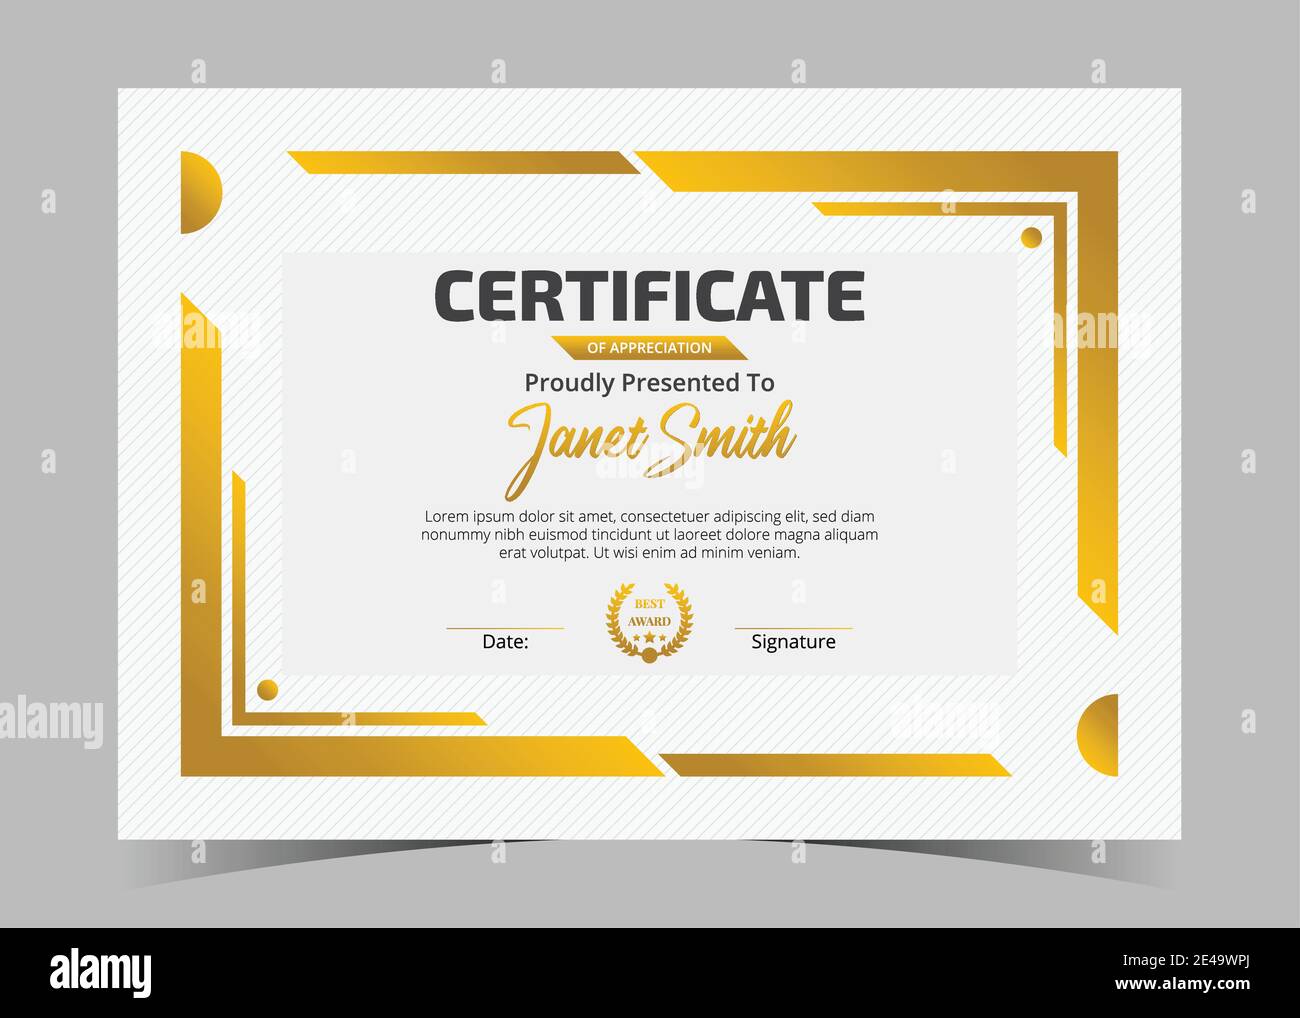 award certificate template. diploma certificate template In Professional Award Certificate Template